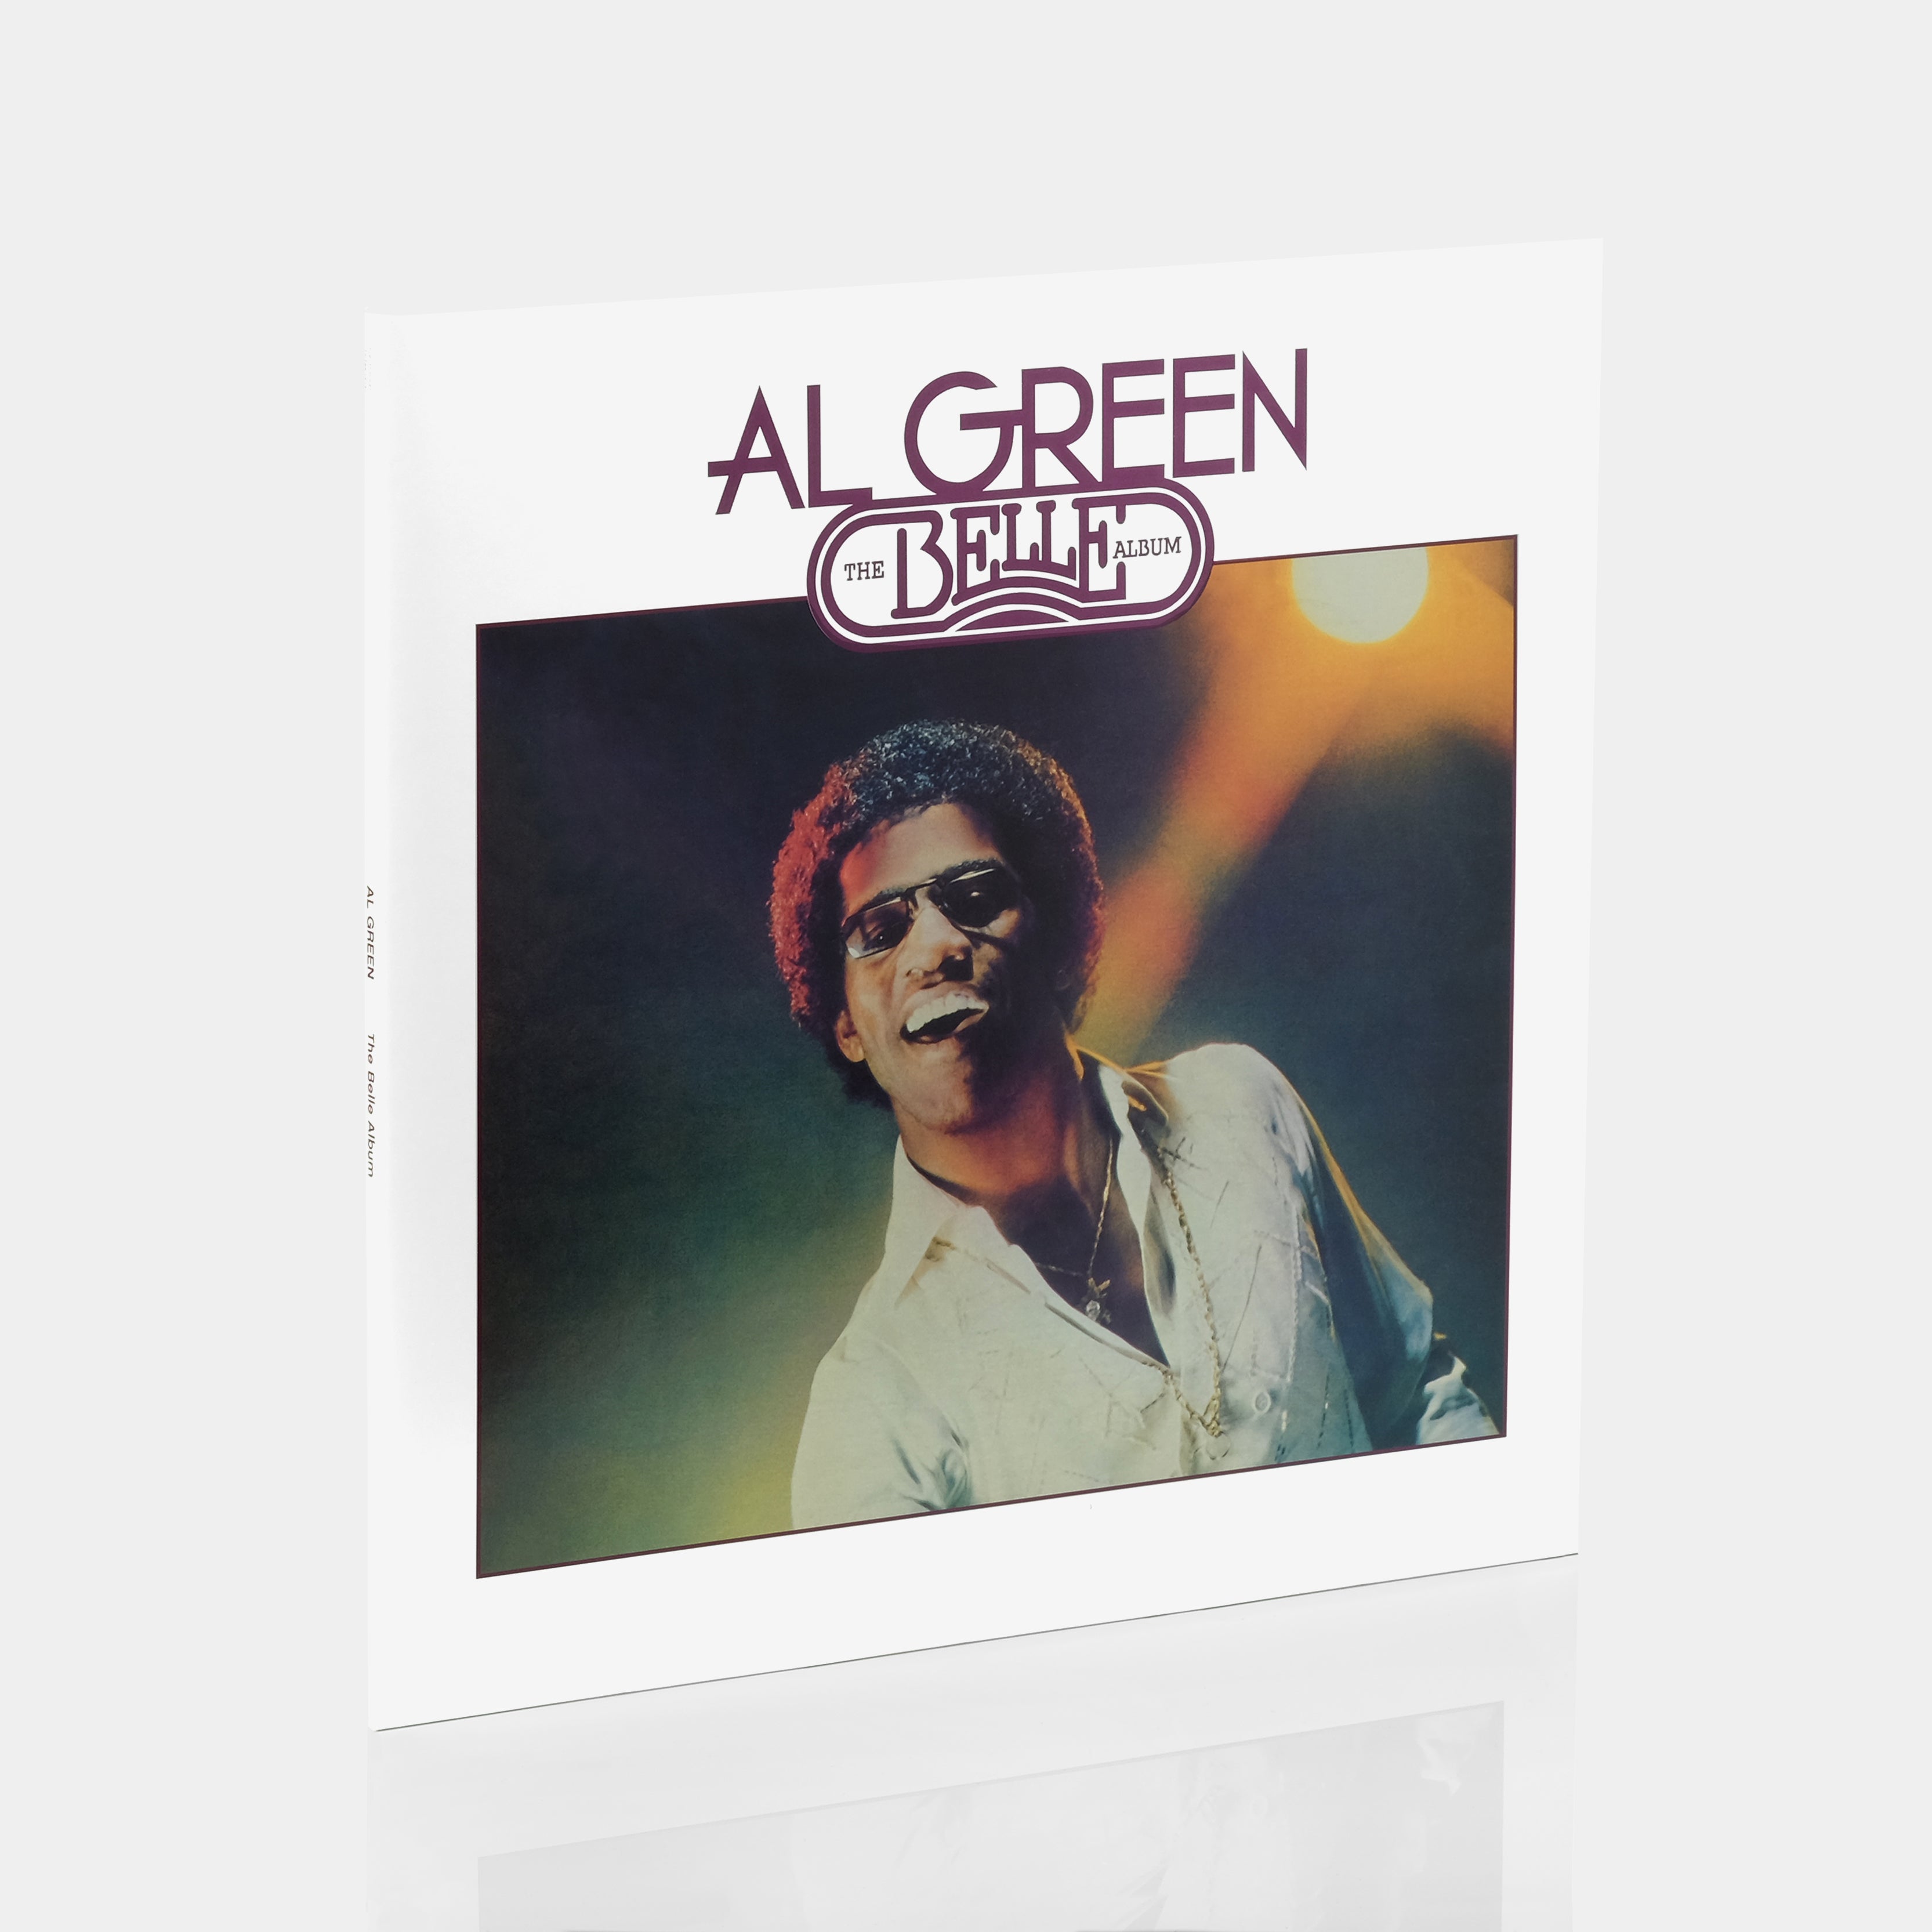 Al Green - The Belle Album LP Vinyl Record